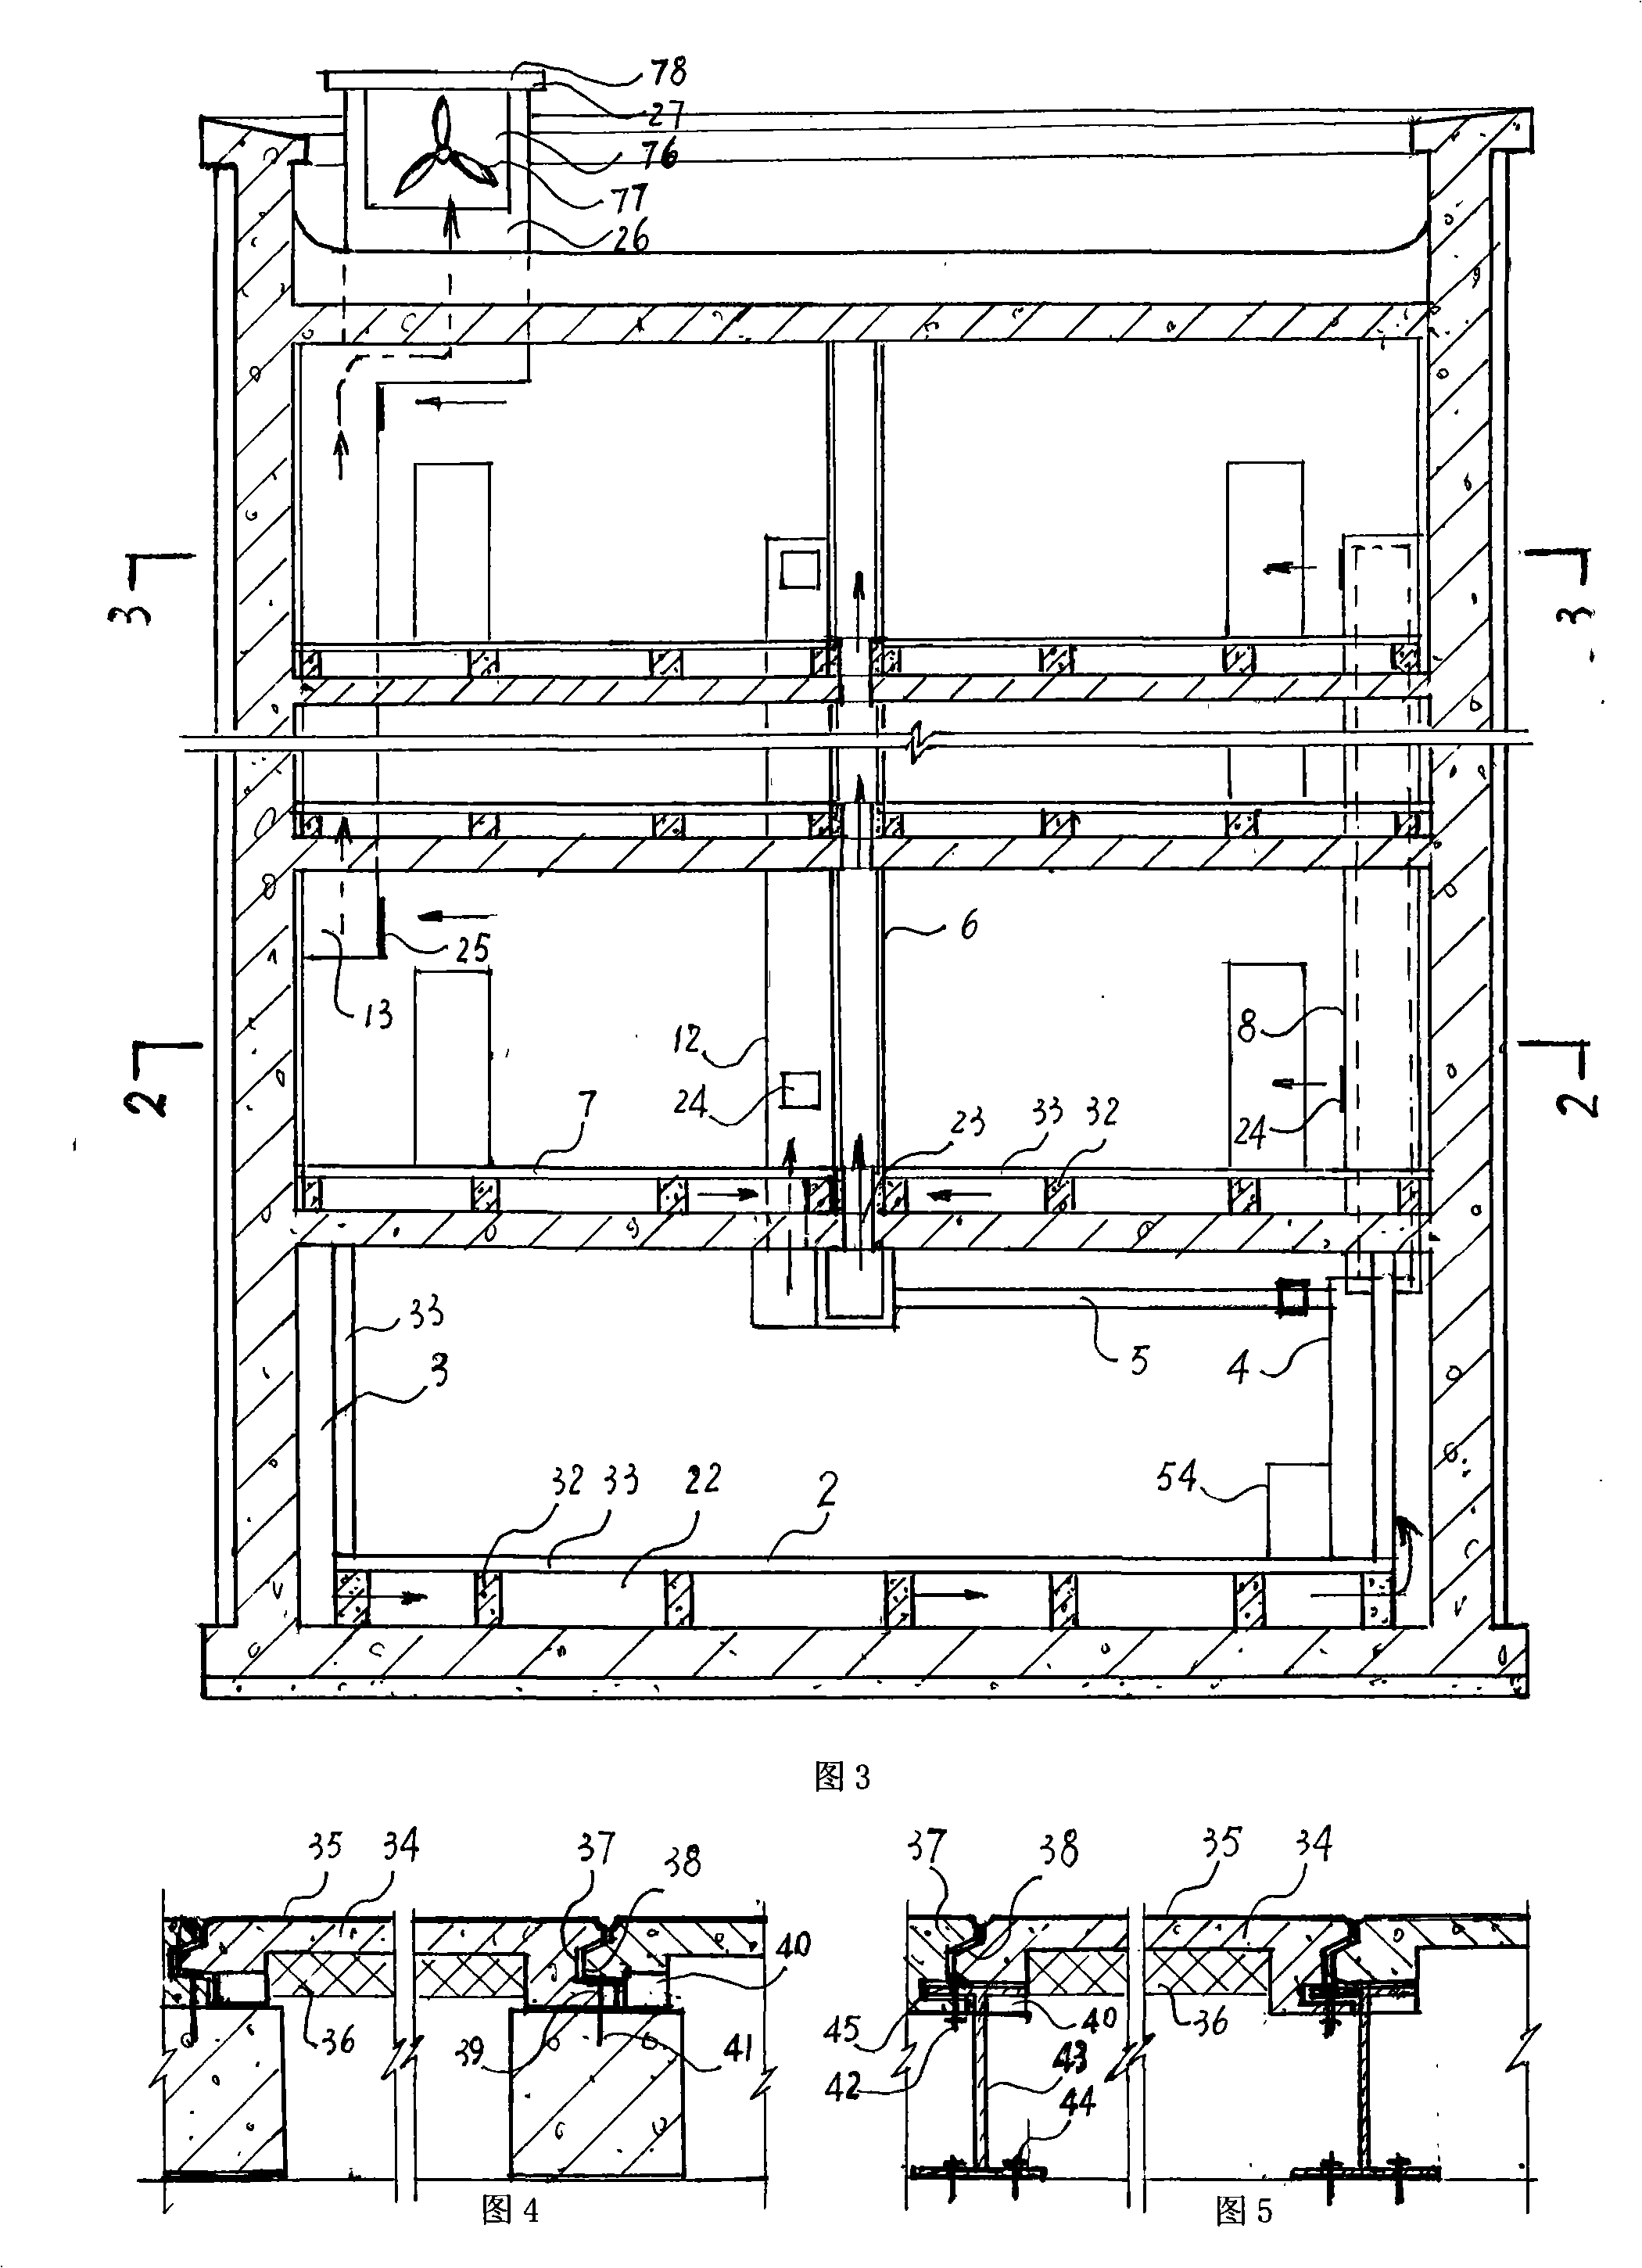 Novel ventilation air-conditioning room